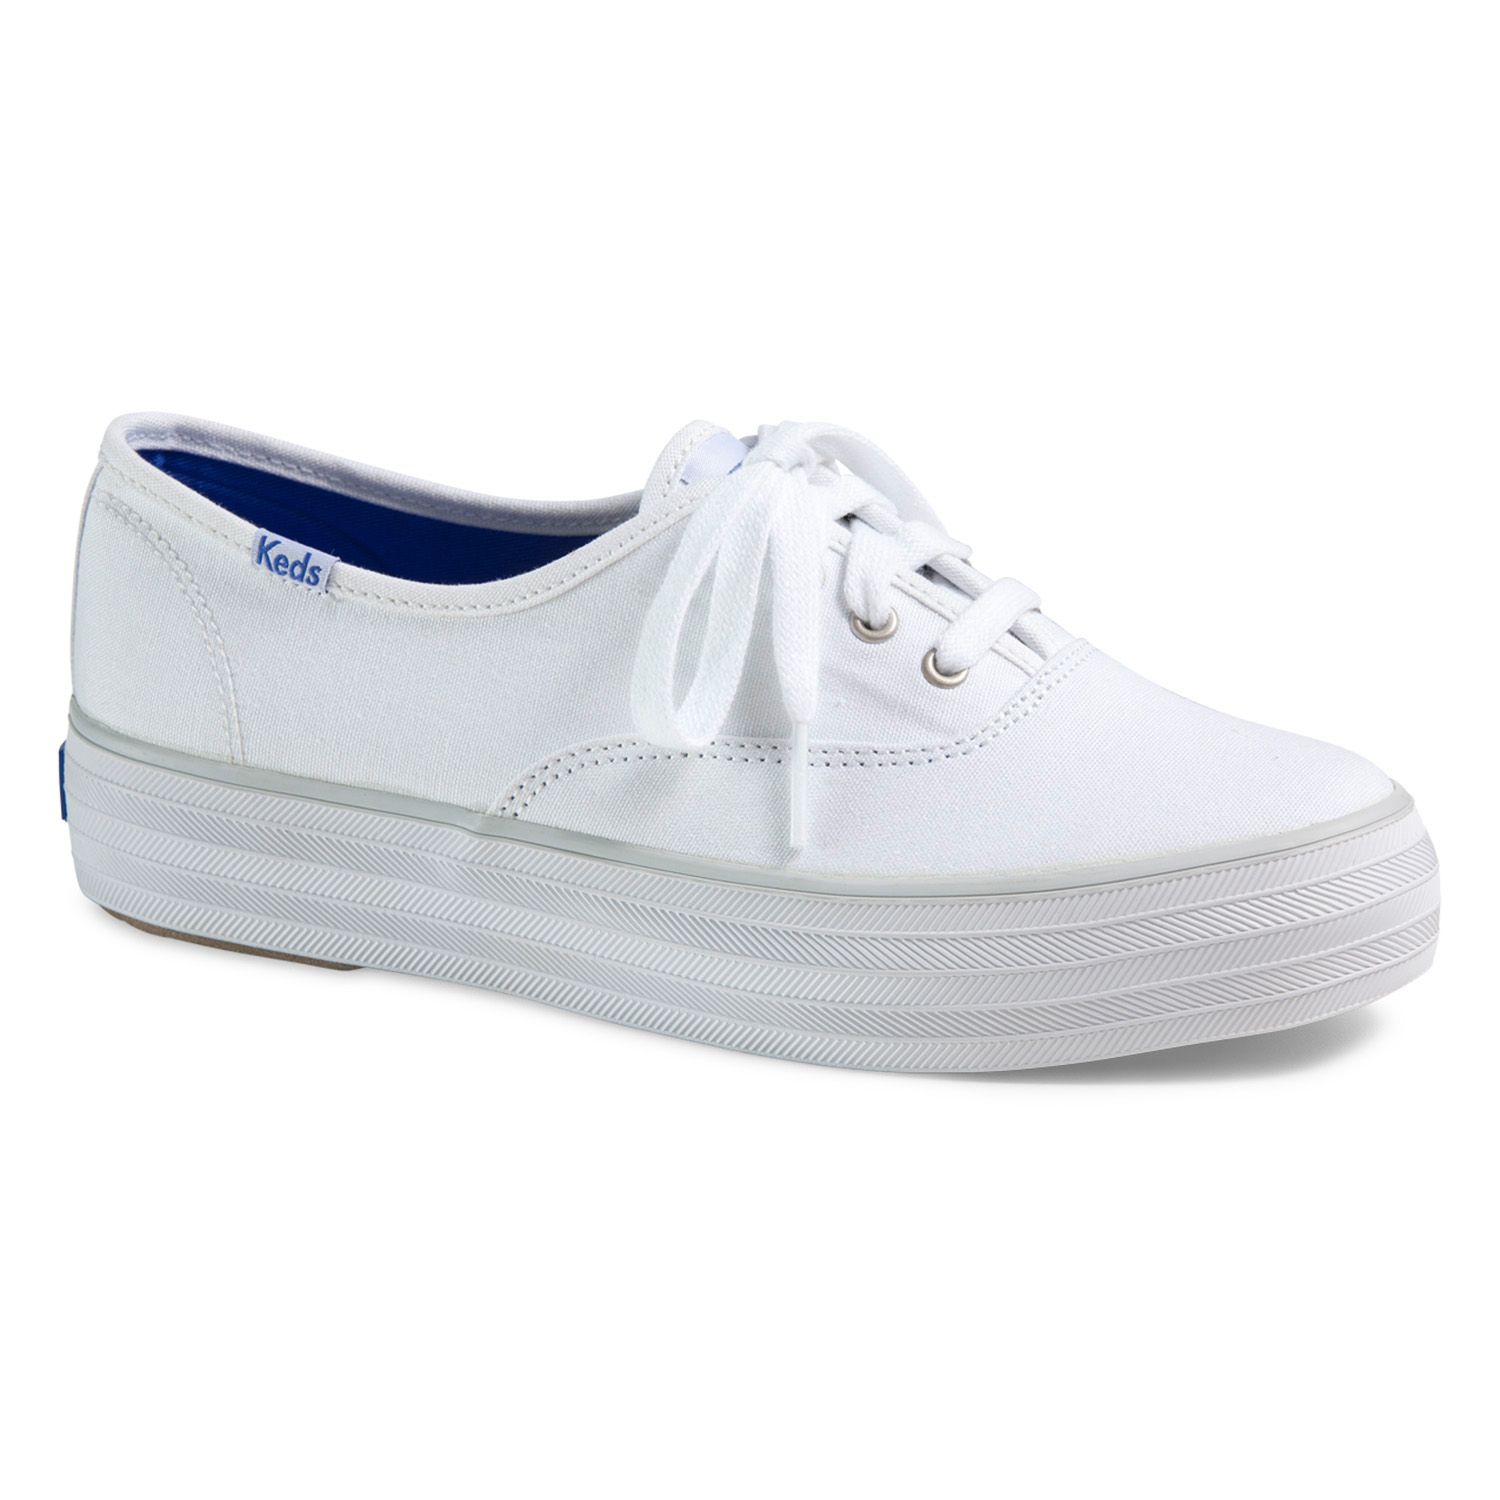 keds white platform sneakers